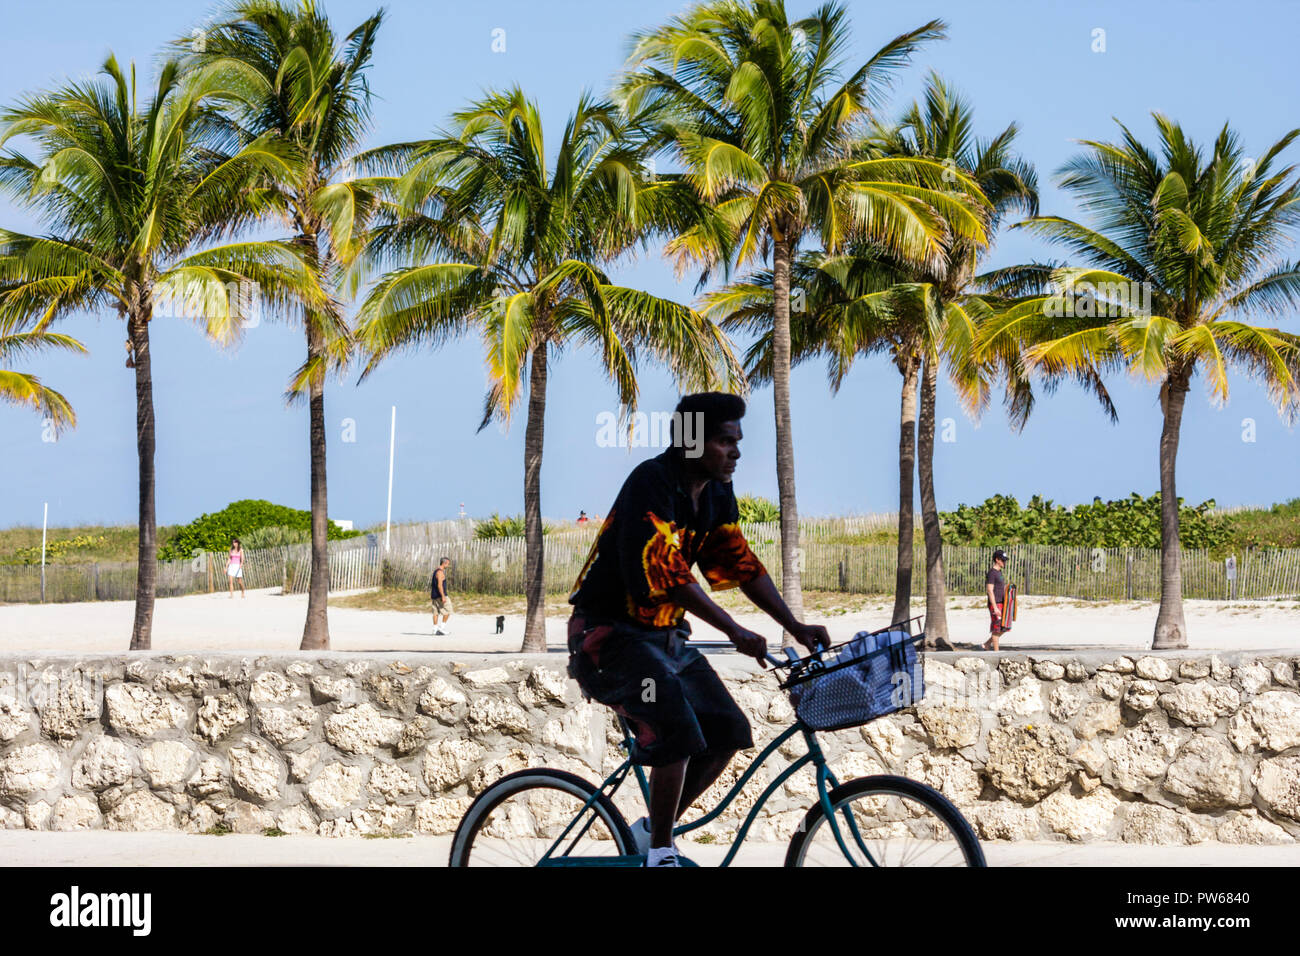 Miami Beach Florida, Lummus Park, Silhouette, Männer Männer Erwachsene Erwachsene, Fahrrad, Radfahren, Reiten, Radfahren, Fahrer, Radfahren, Palmen, Sand, Korallenwand, Oolith, sp Stockfoto